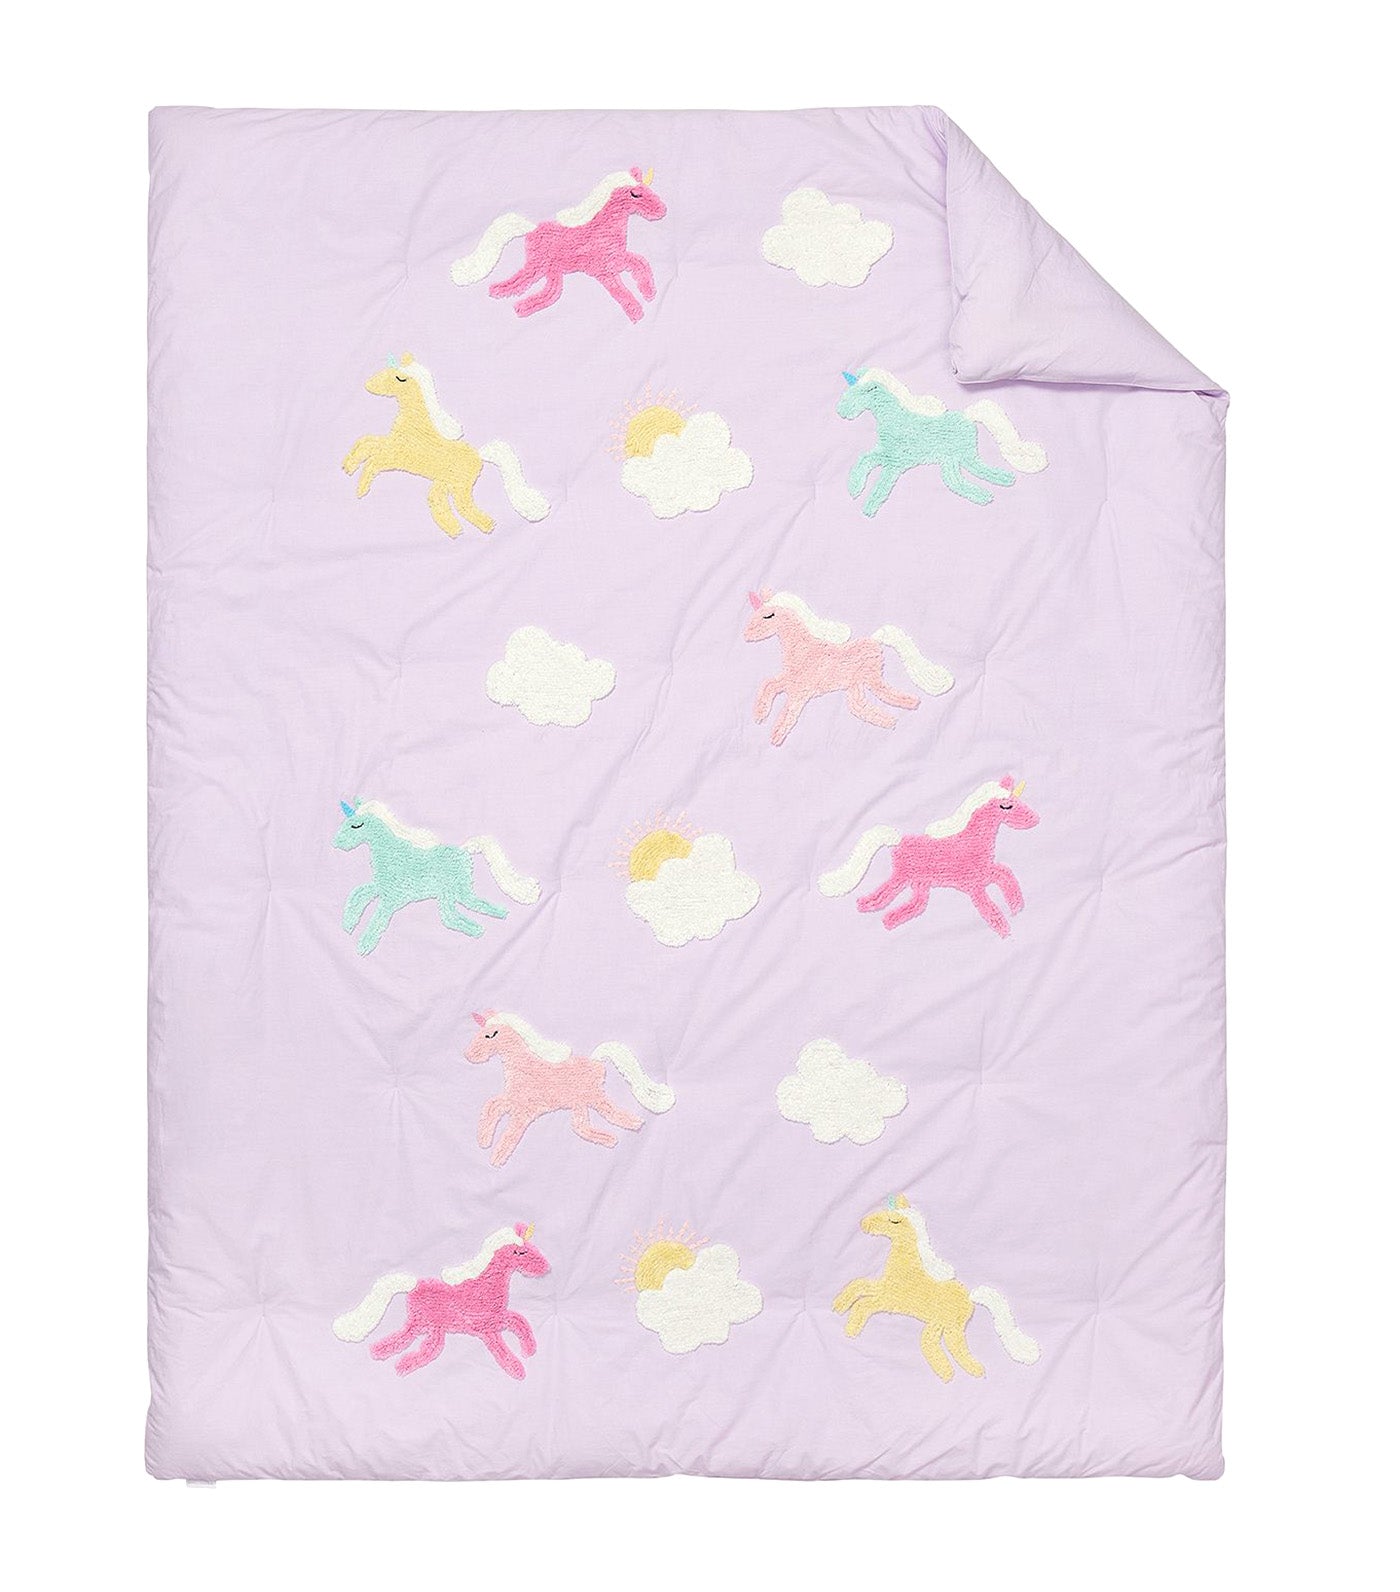 Candlewick Unicorn Comforter and Shams